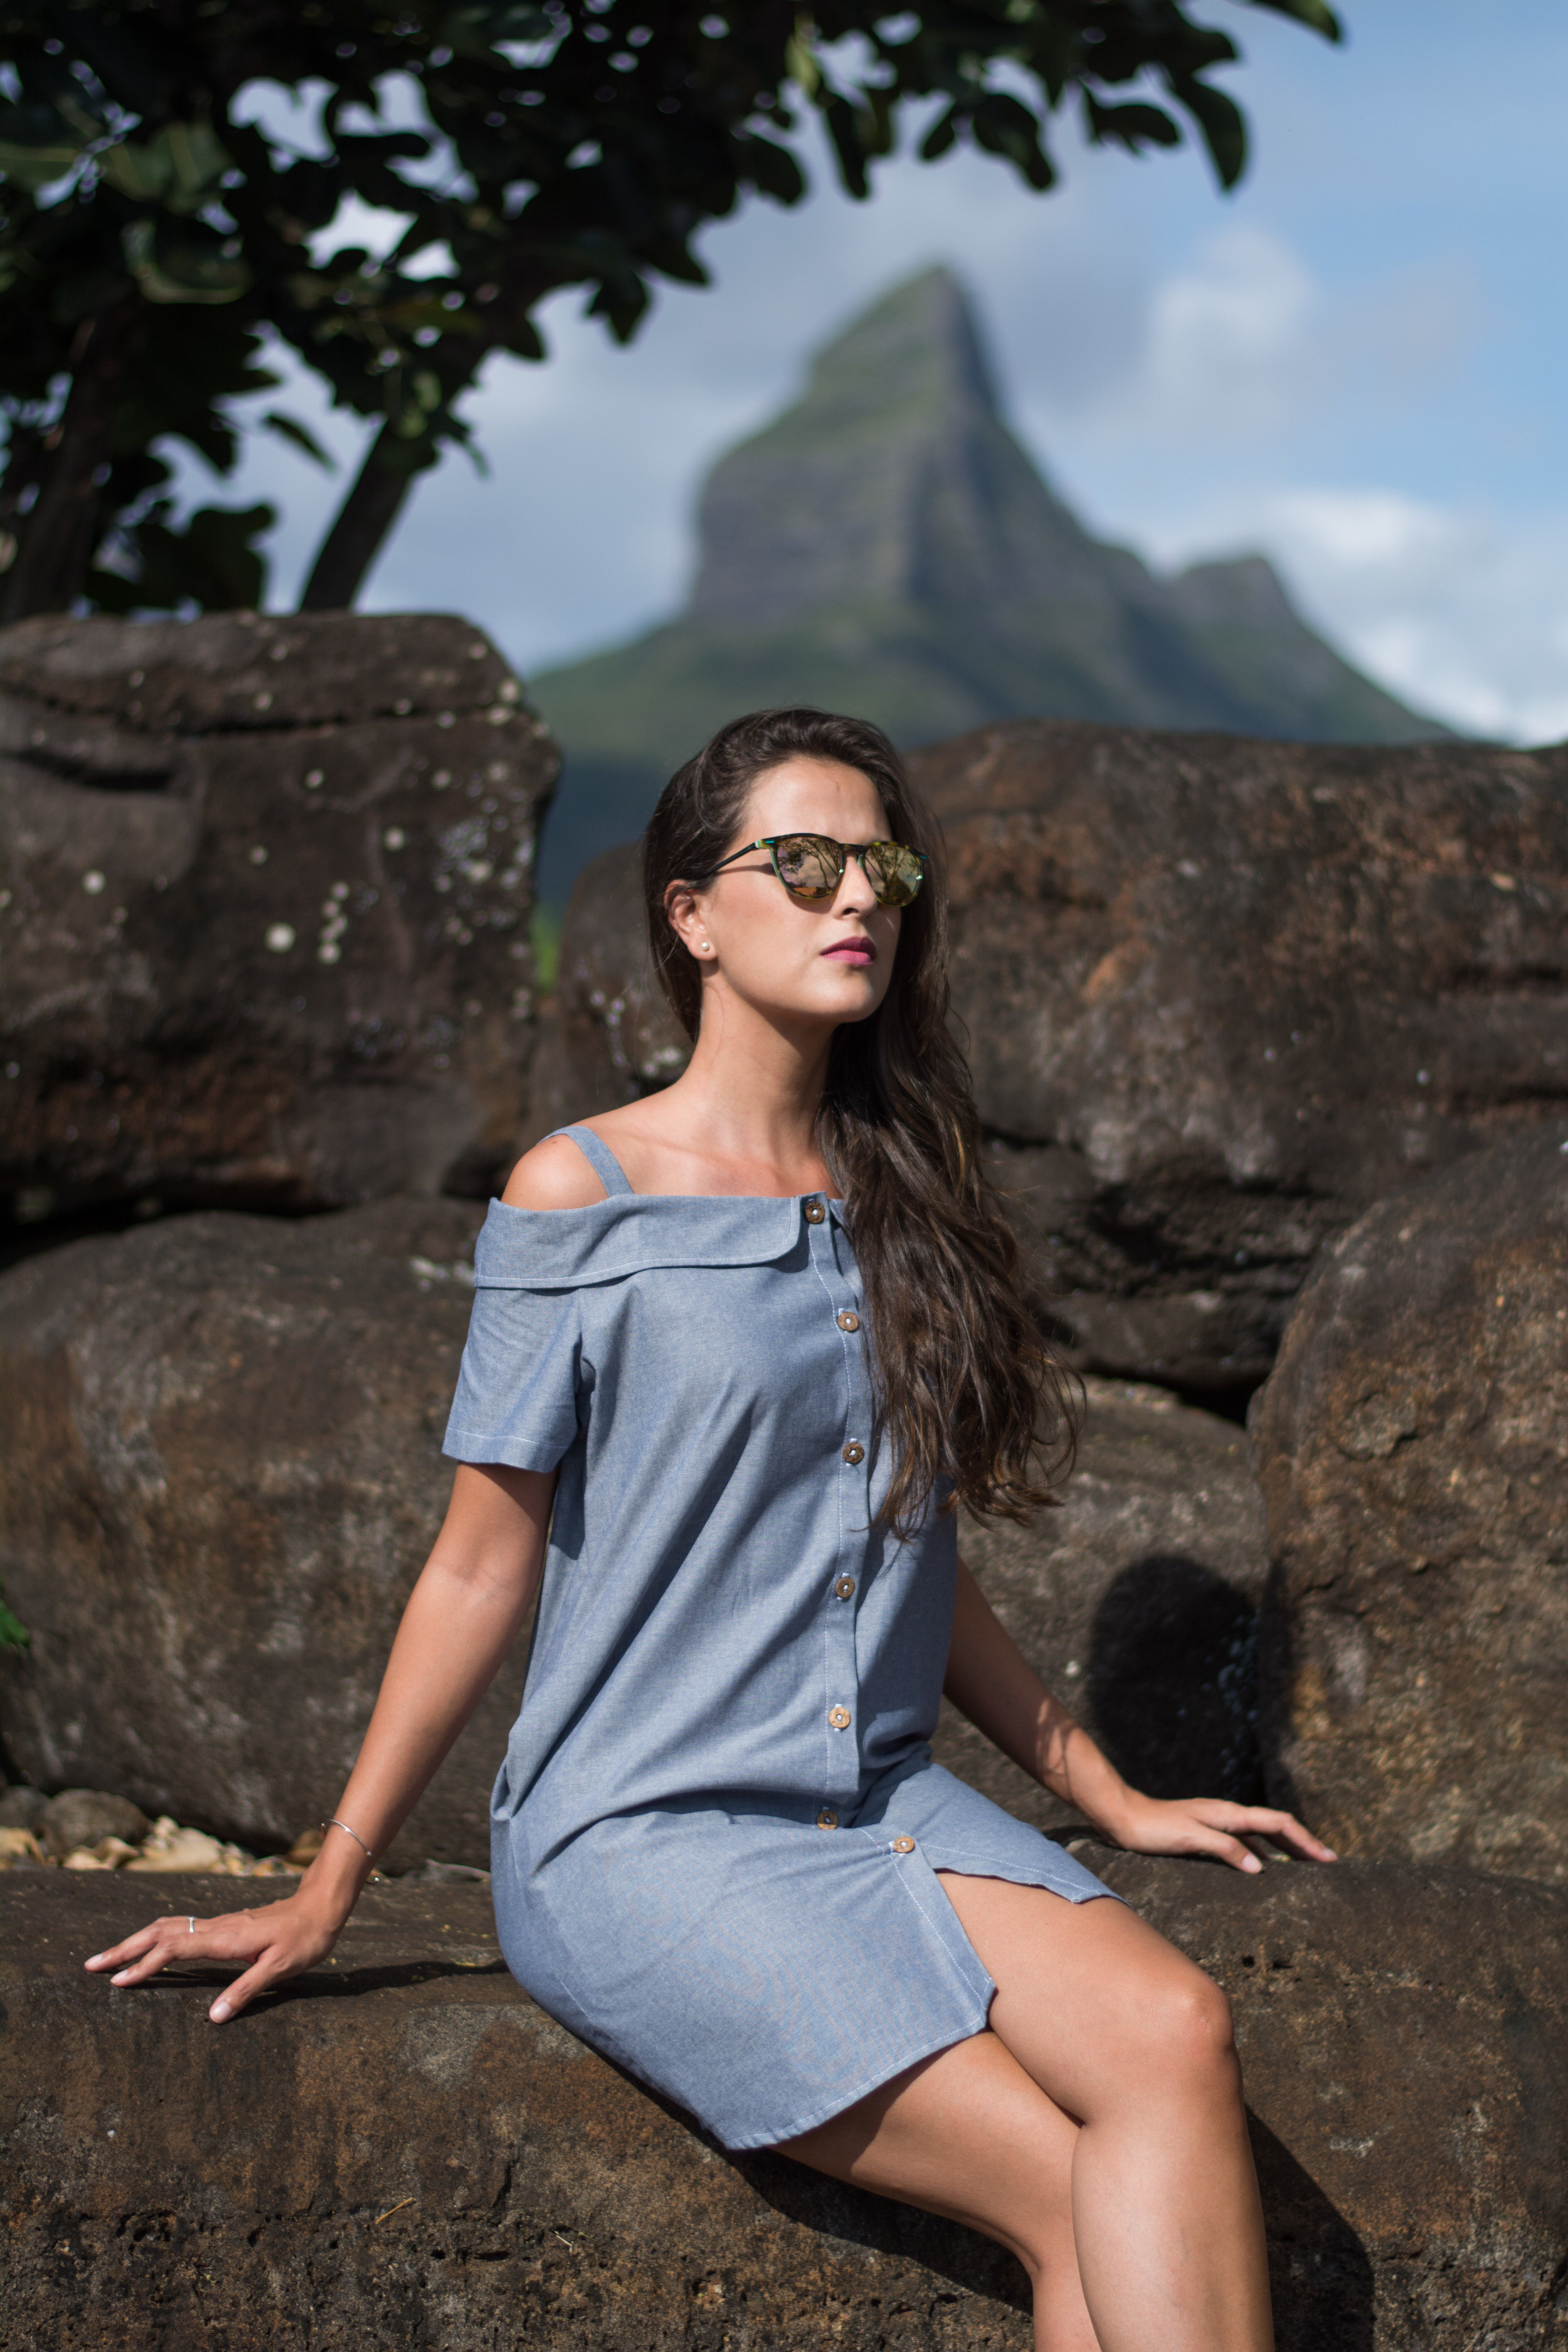   AS Mauritius   Exclusive women designer wear made locally.  Instagram:  https://www.instagram.com/as_mauritius/  